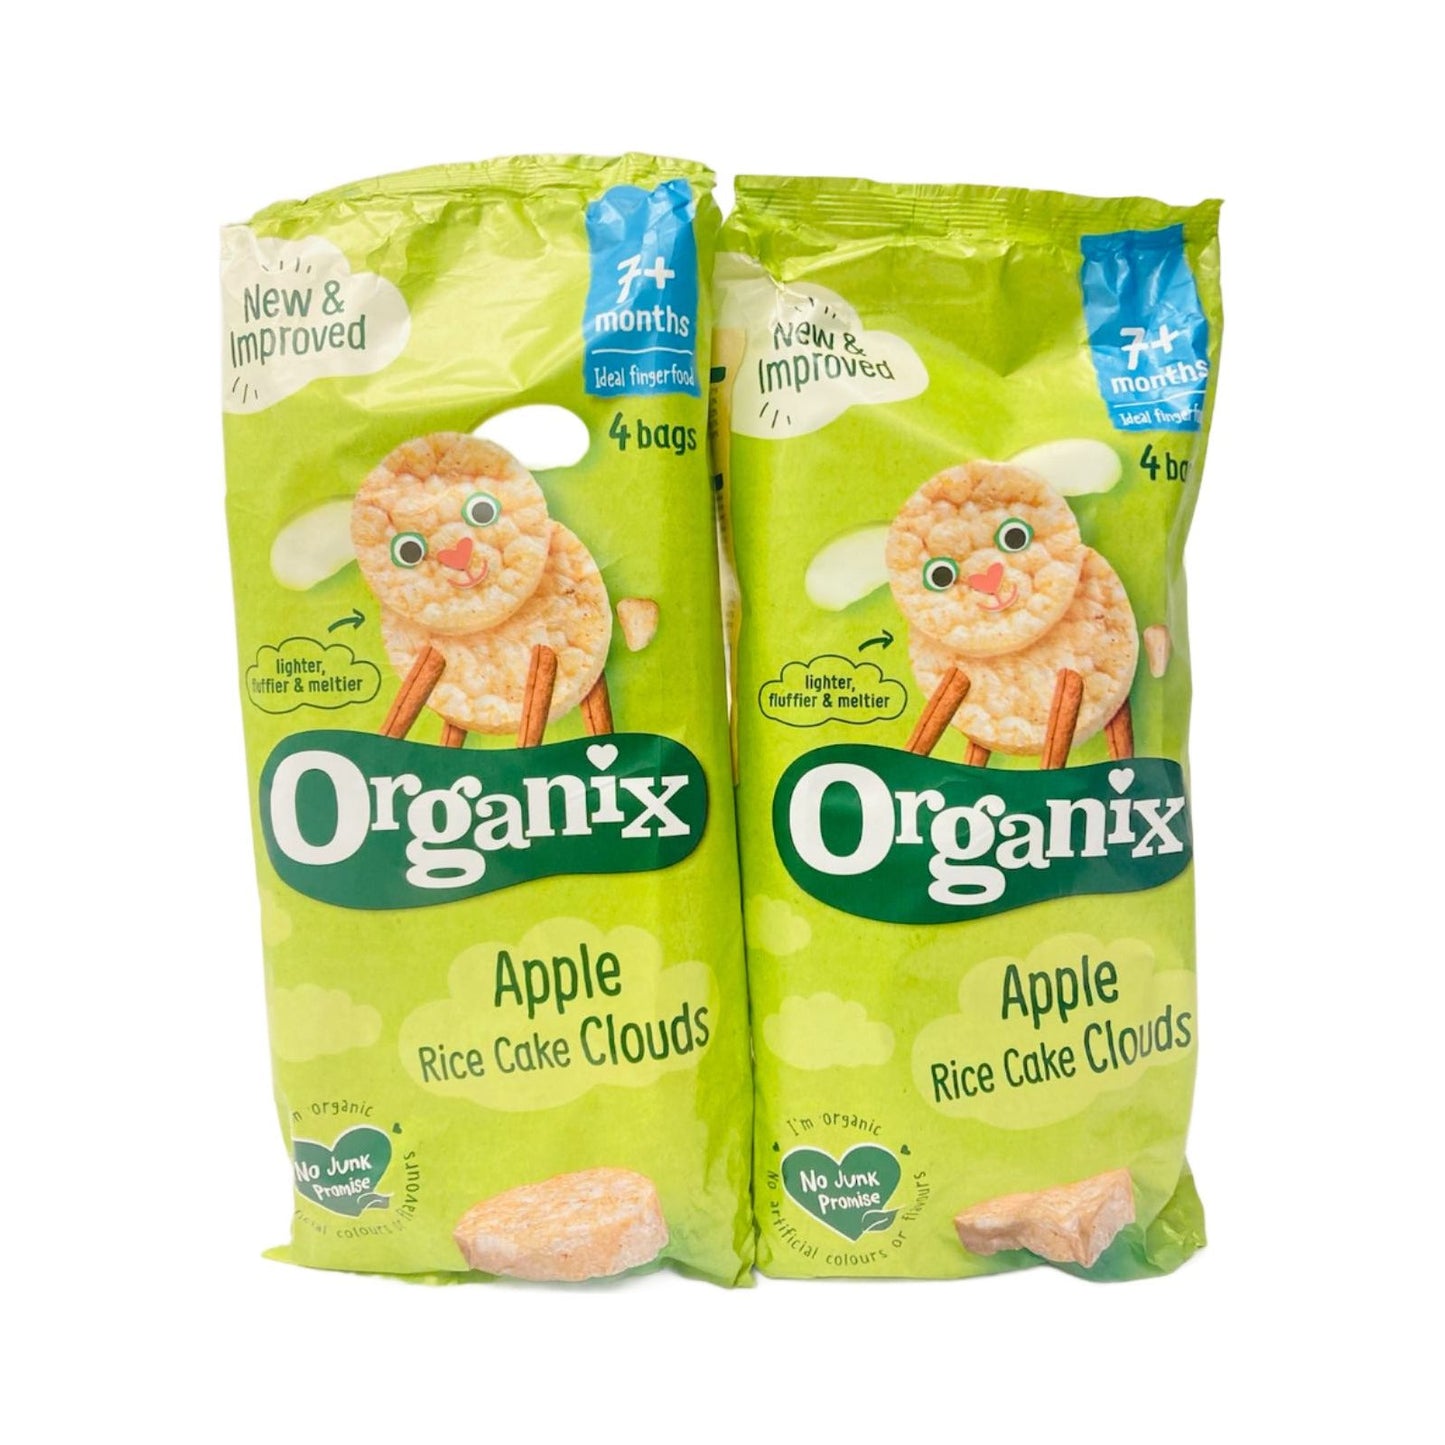 Organix Apple Rice Cake Clouds 72g (4x18g bags) - Pack of 2 (8 bags total)